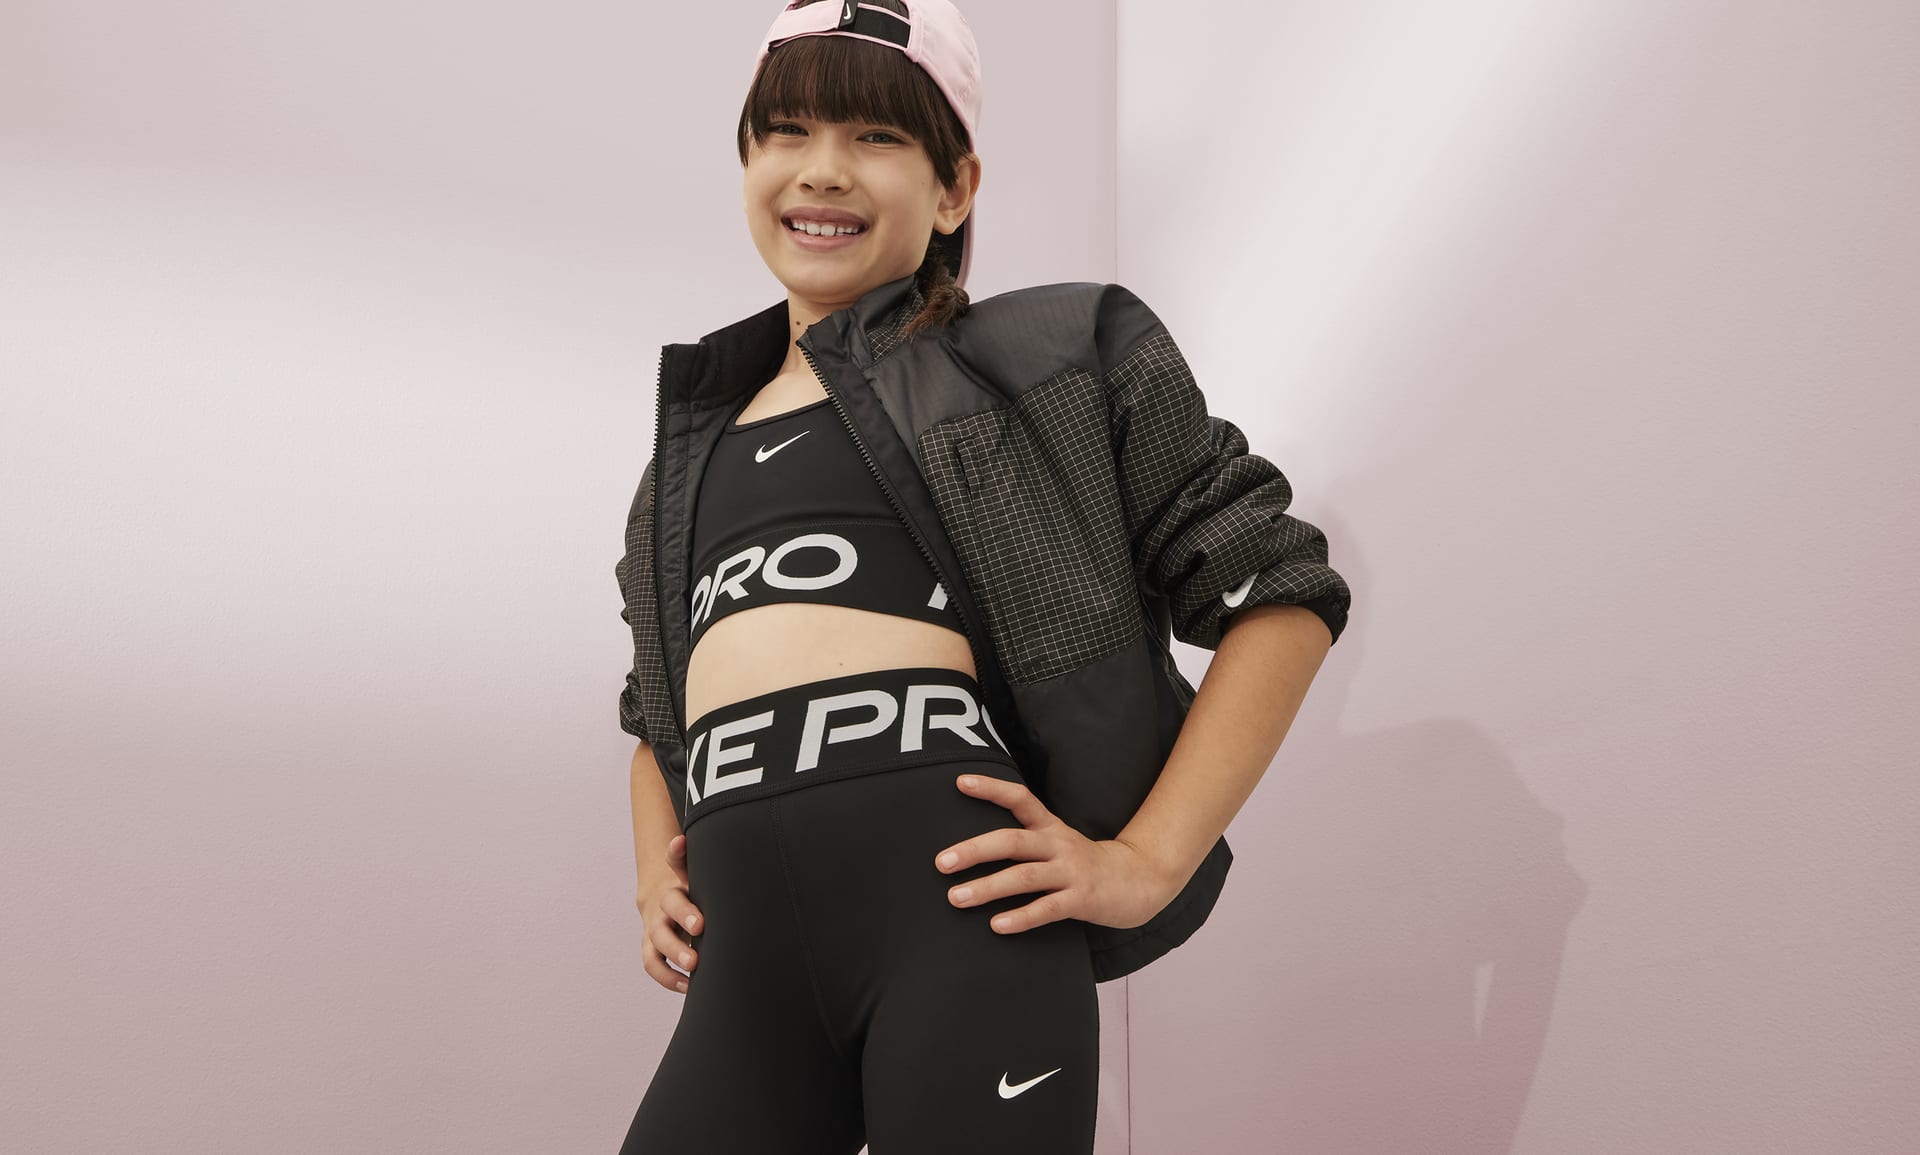 Buy Nike Pro Big Girls Leggings (DA1028) black from £27.00 (Today) – Best  Deals on